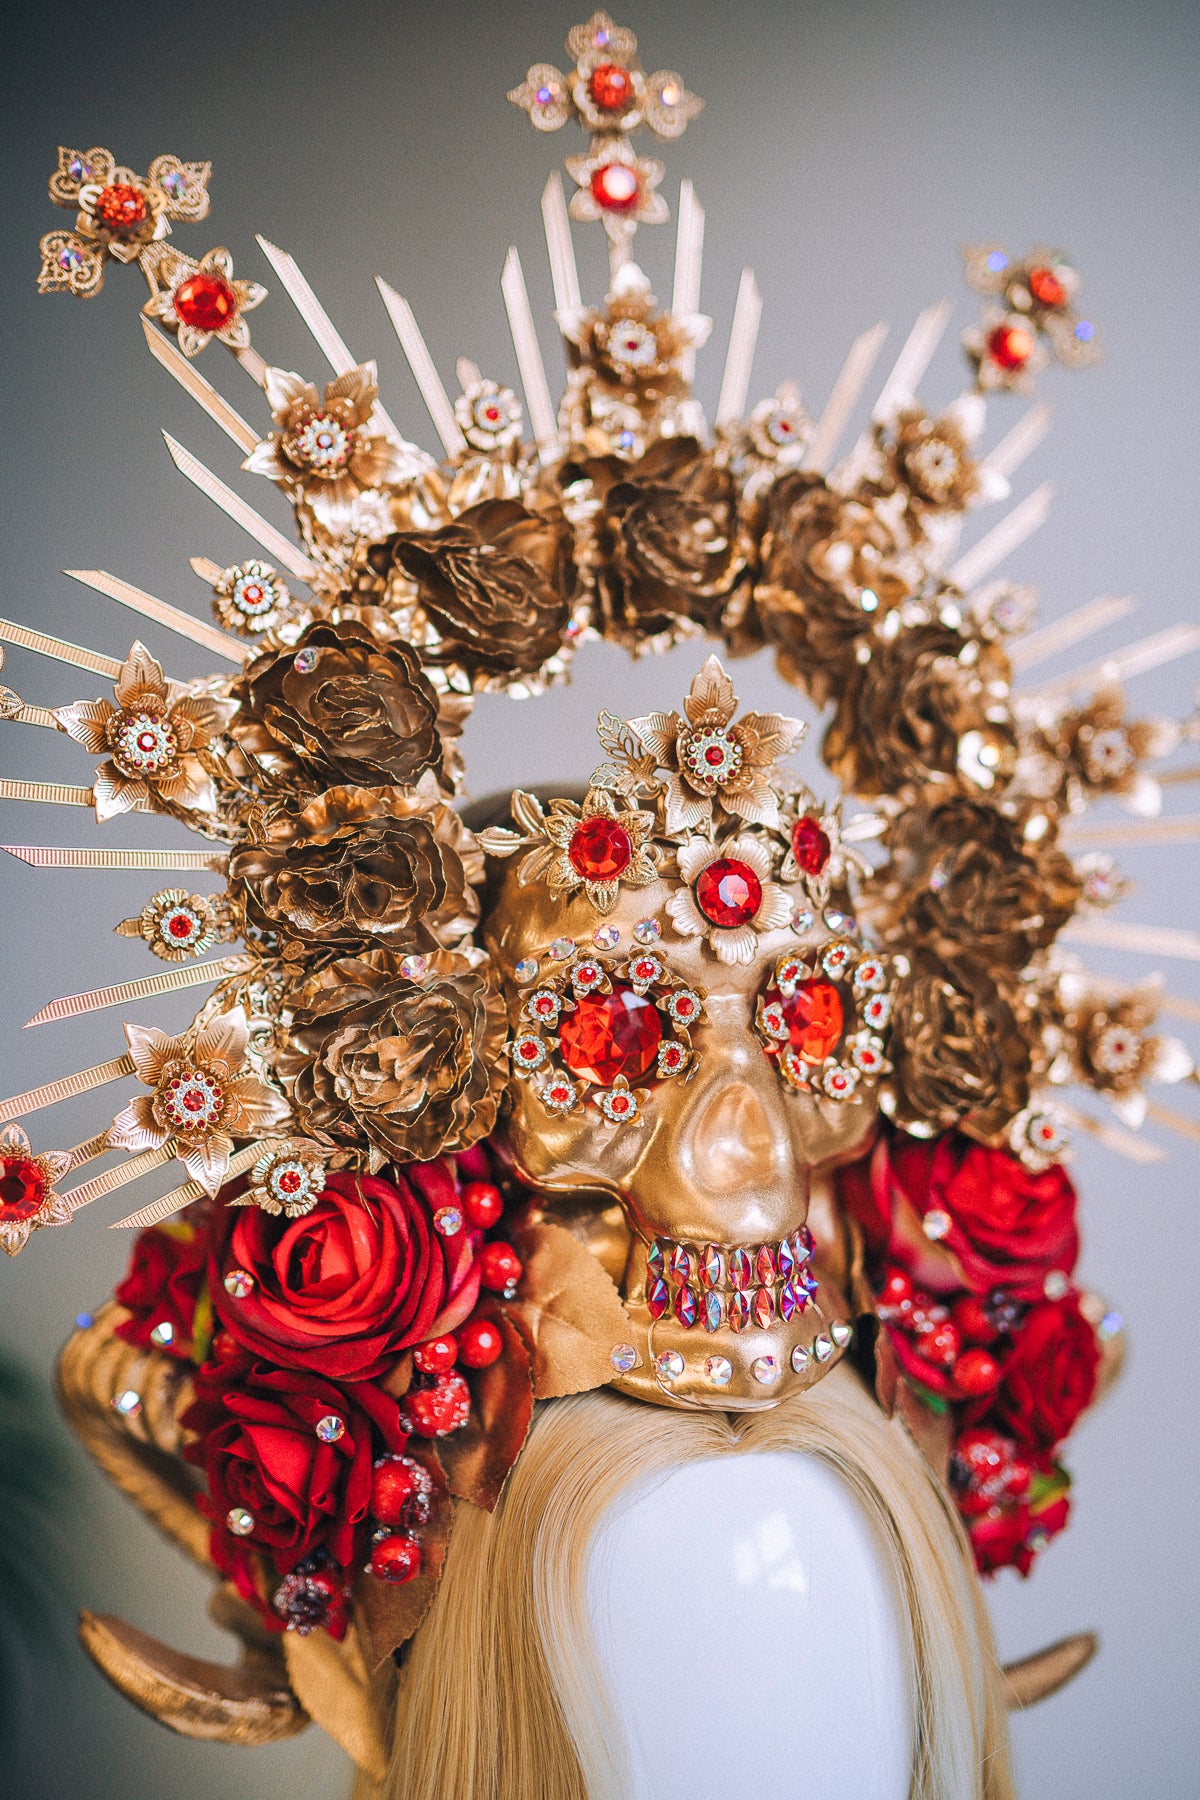 Halloween Sugar Skull Flower Crown